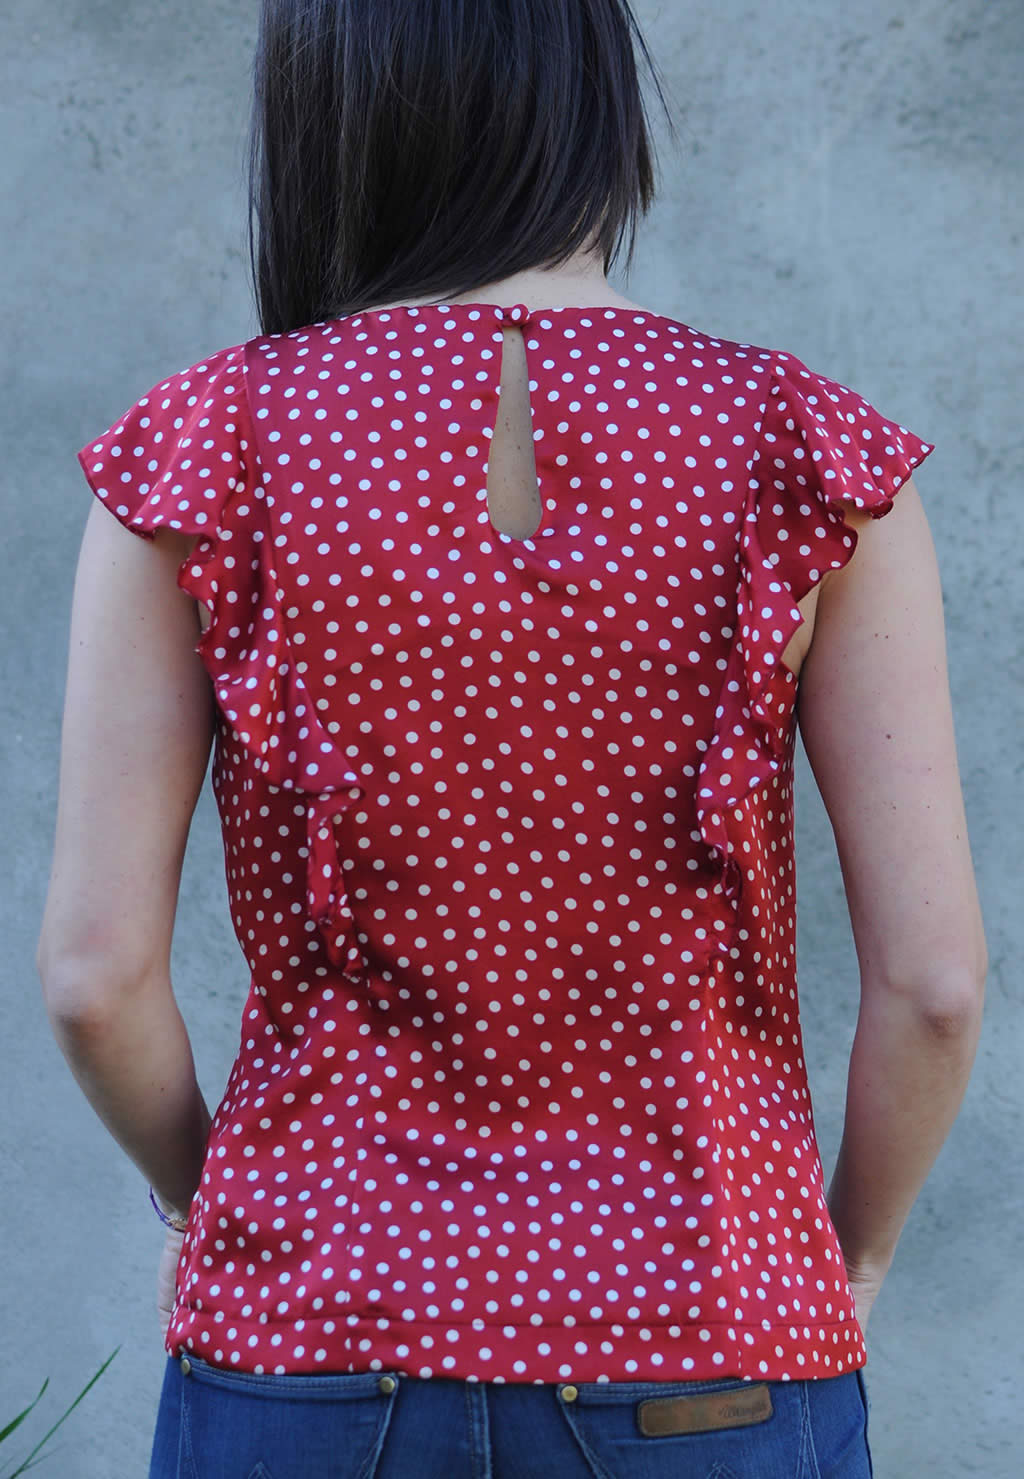 A Polka-dot blouse – Ladulsatina